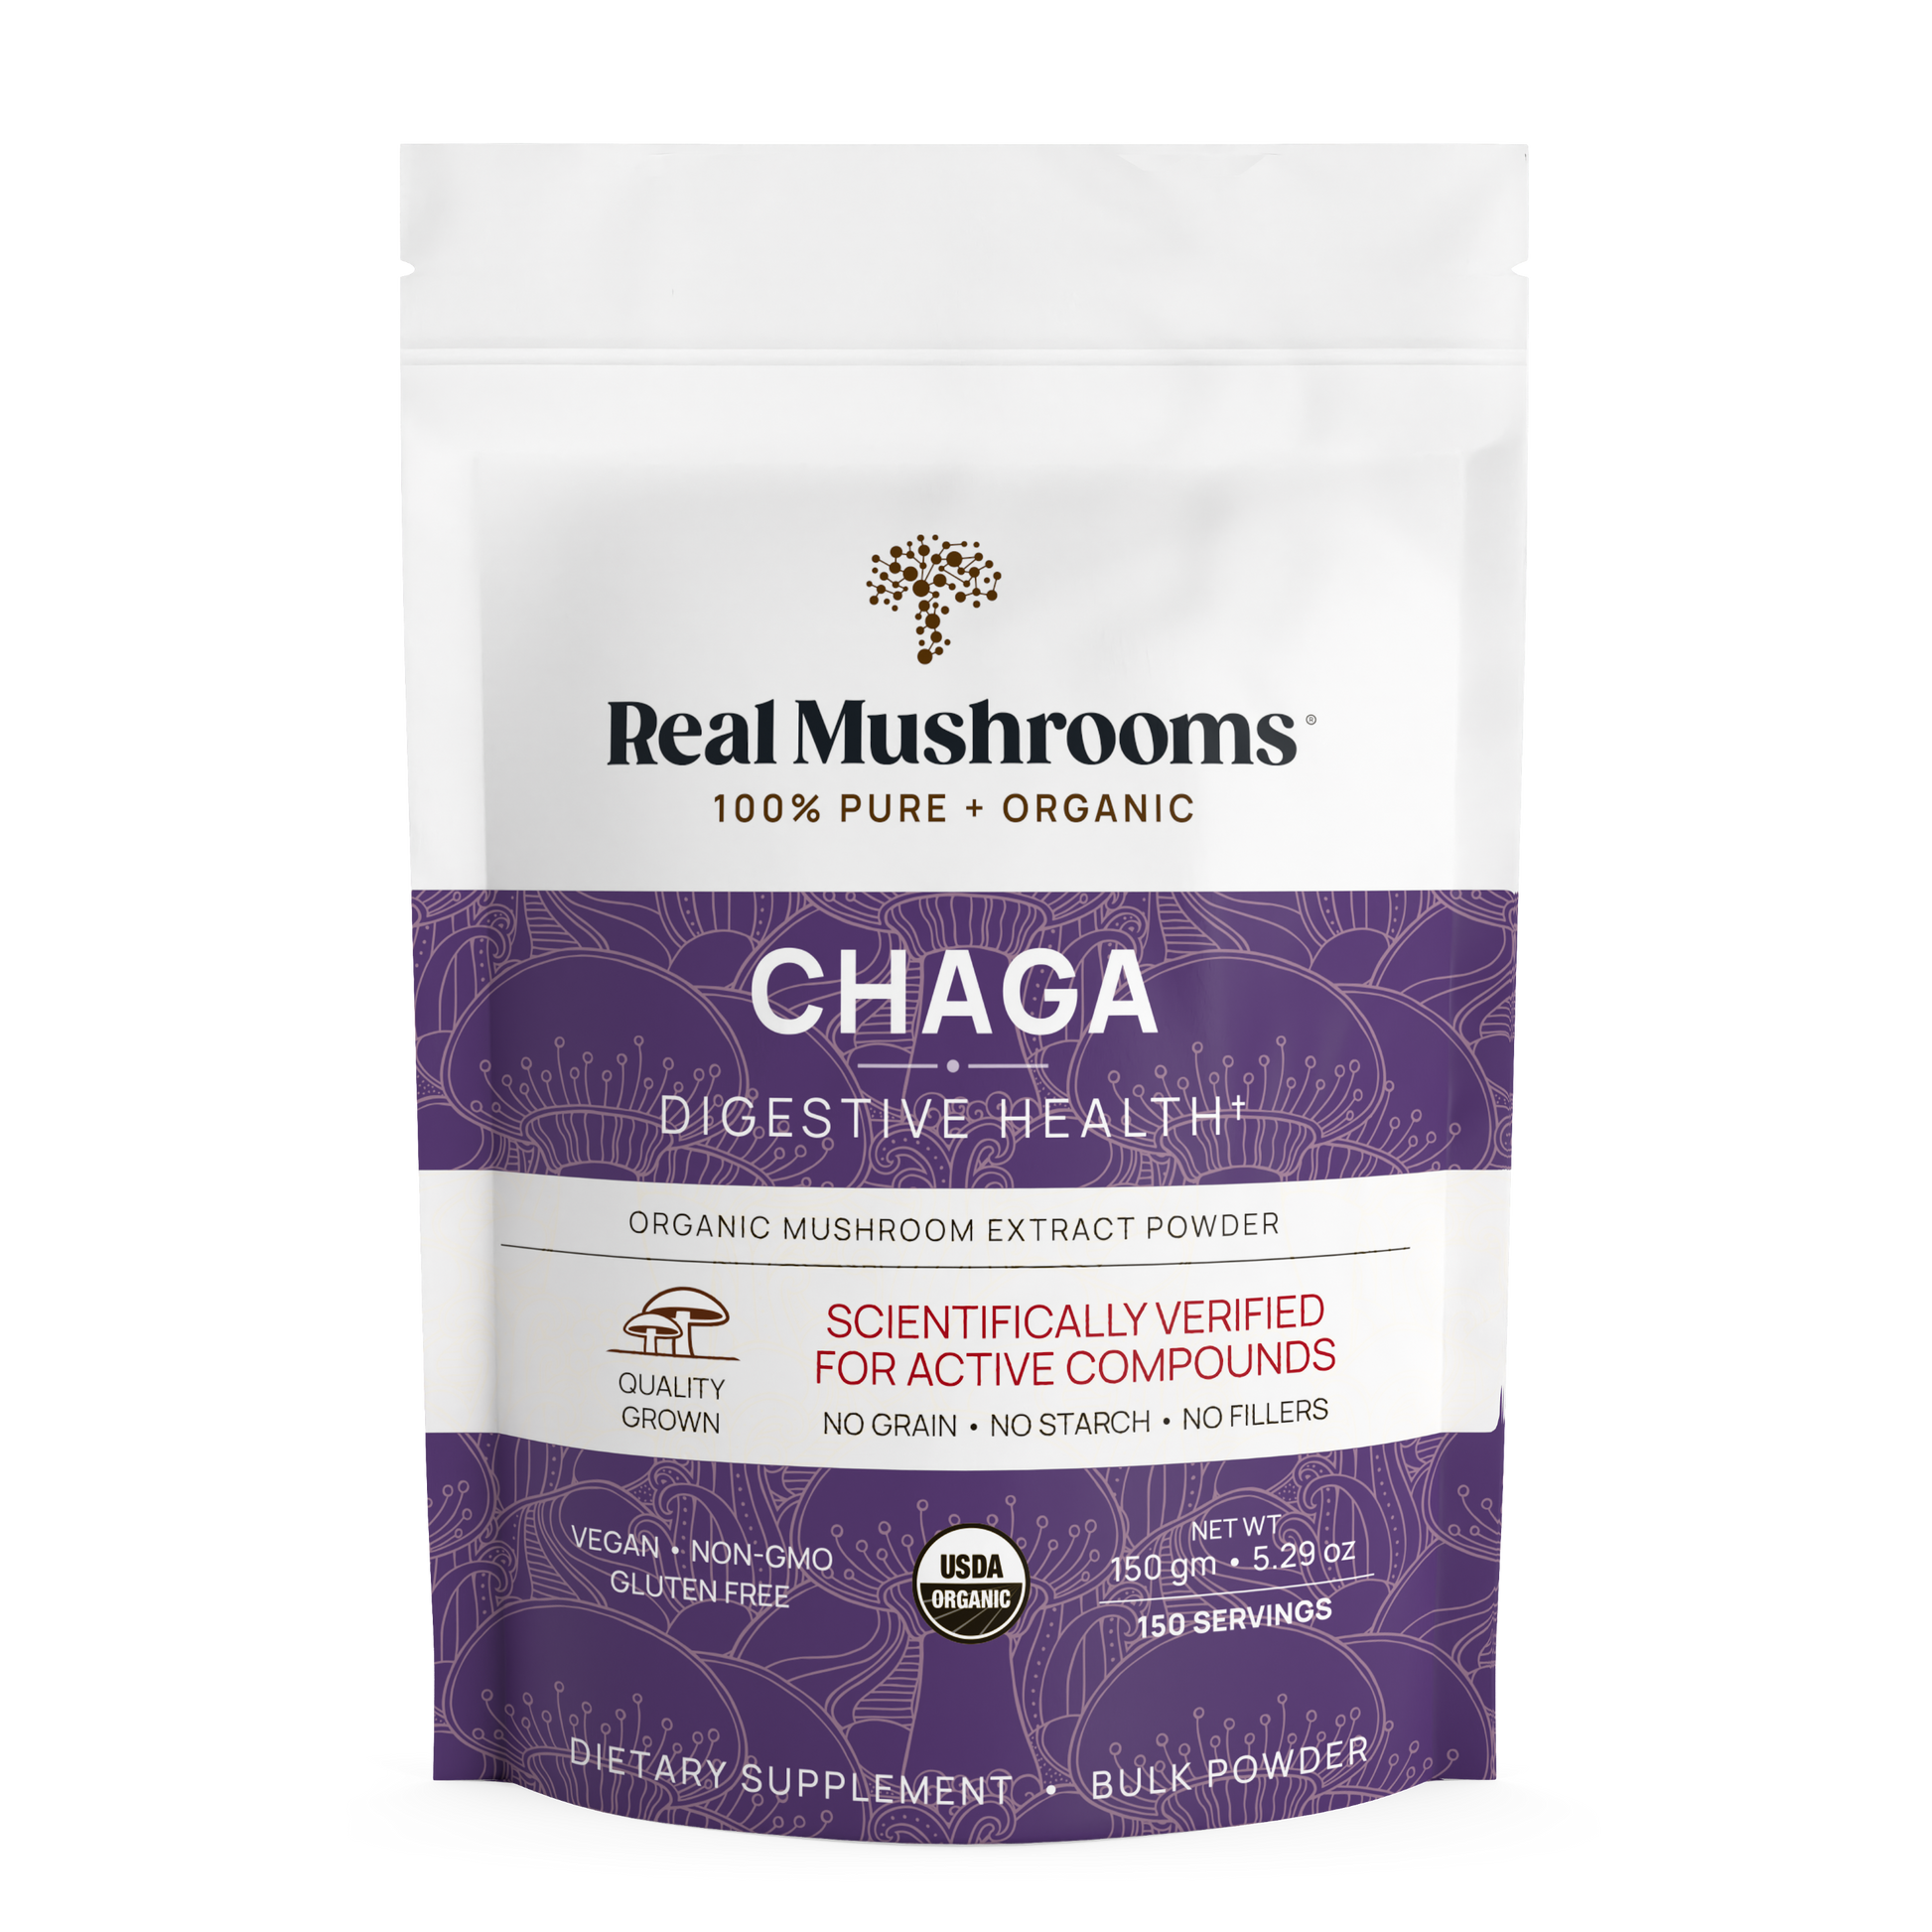 Real Mushrooms Organic Chaga Extract Powder for Pets digestive health.